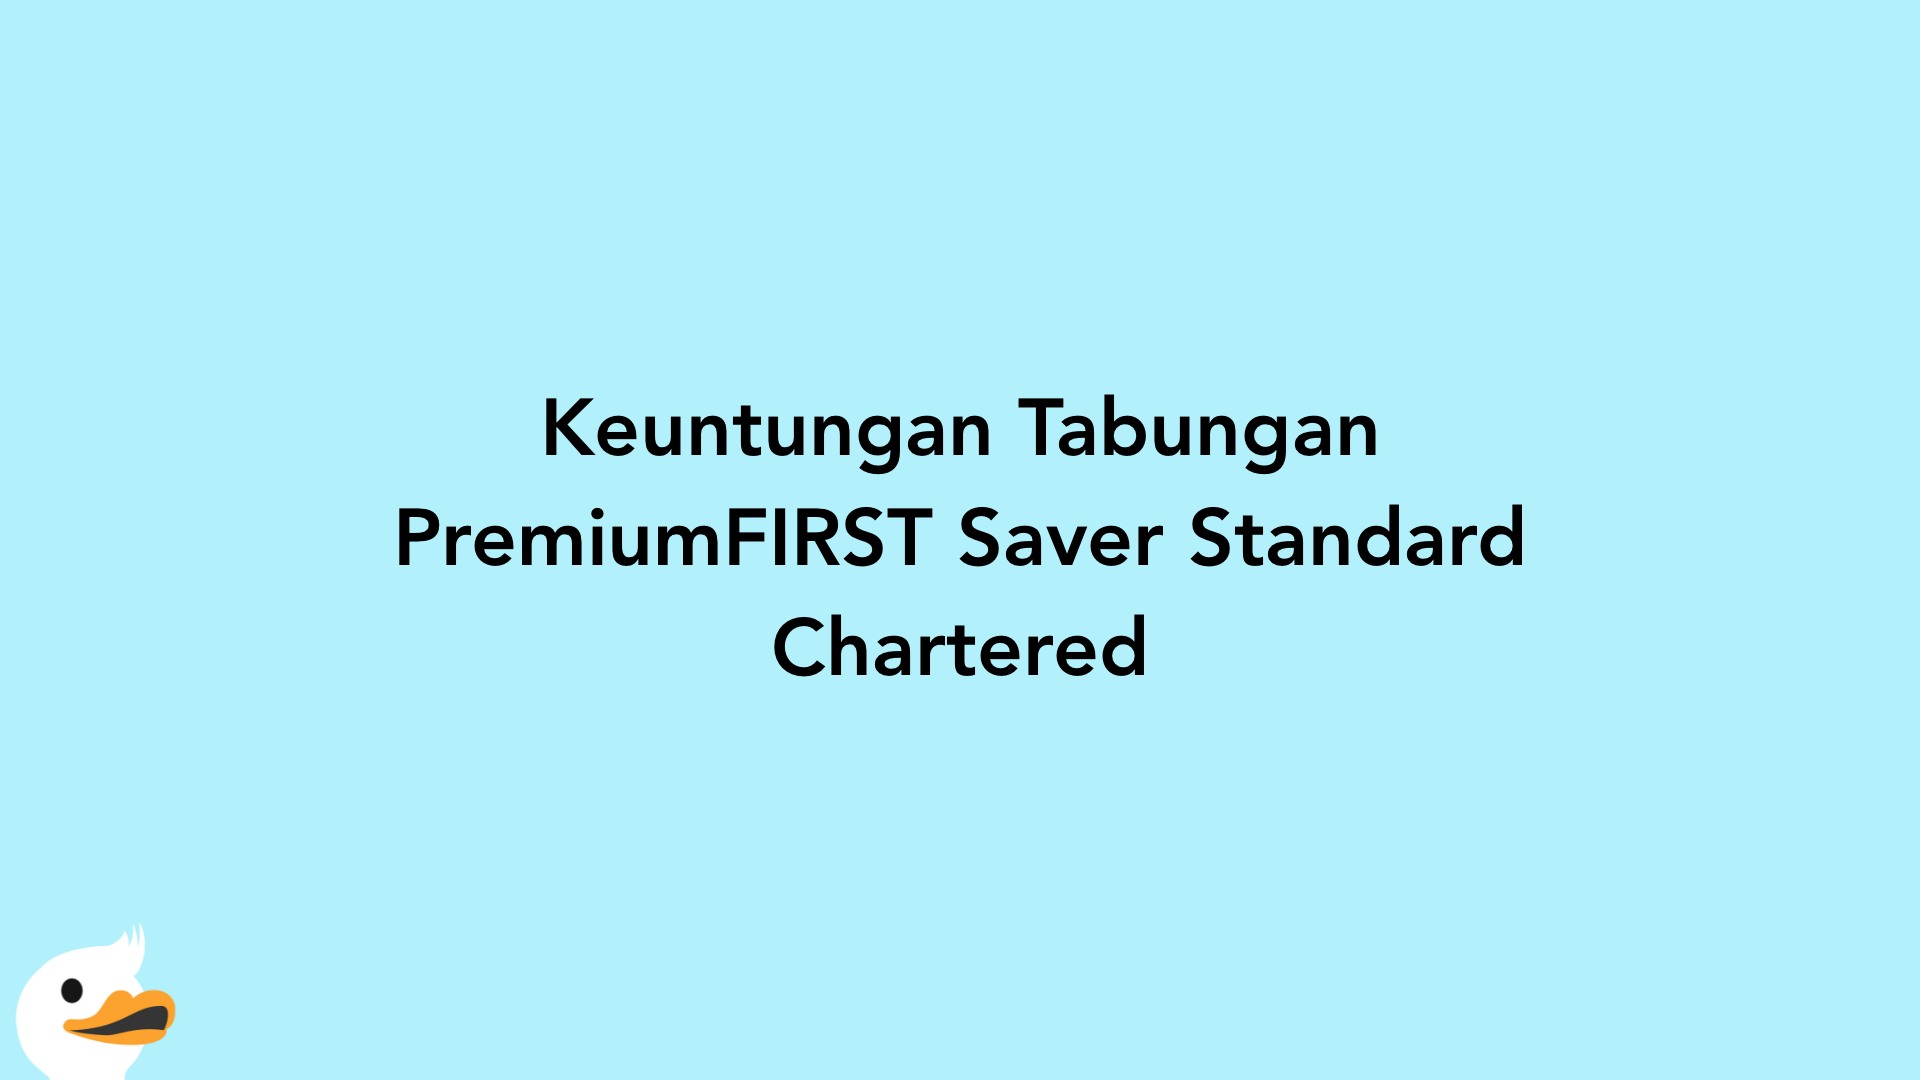 Keuntungan Tabungan PremiumFIRST Saver Standard Chartered